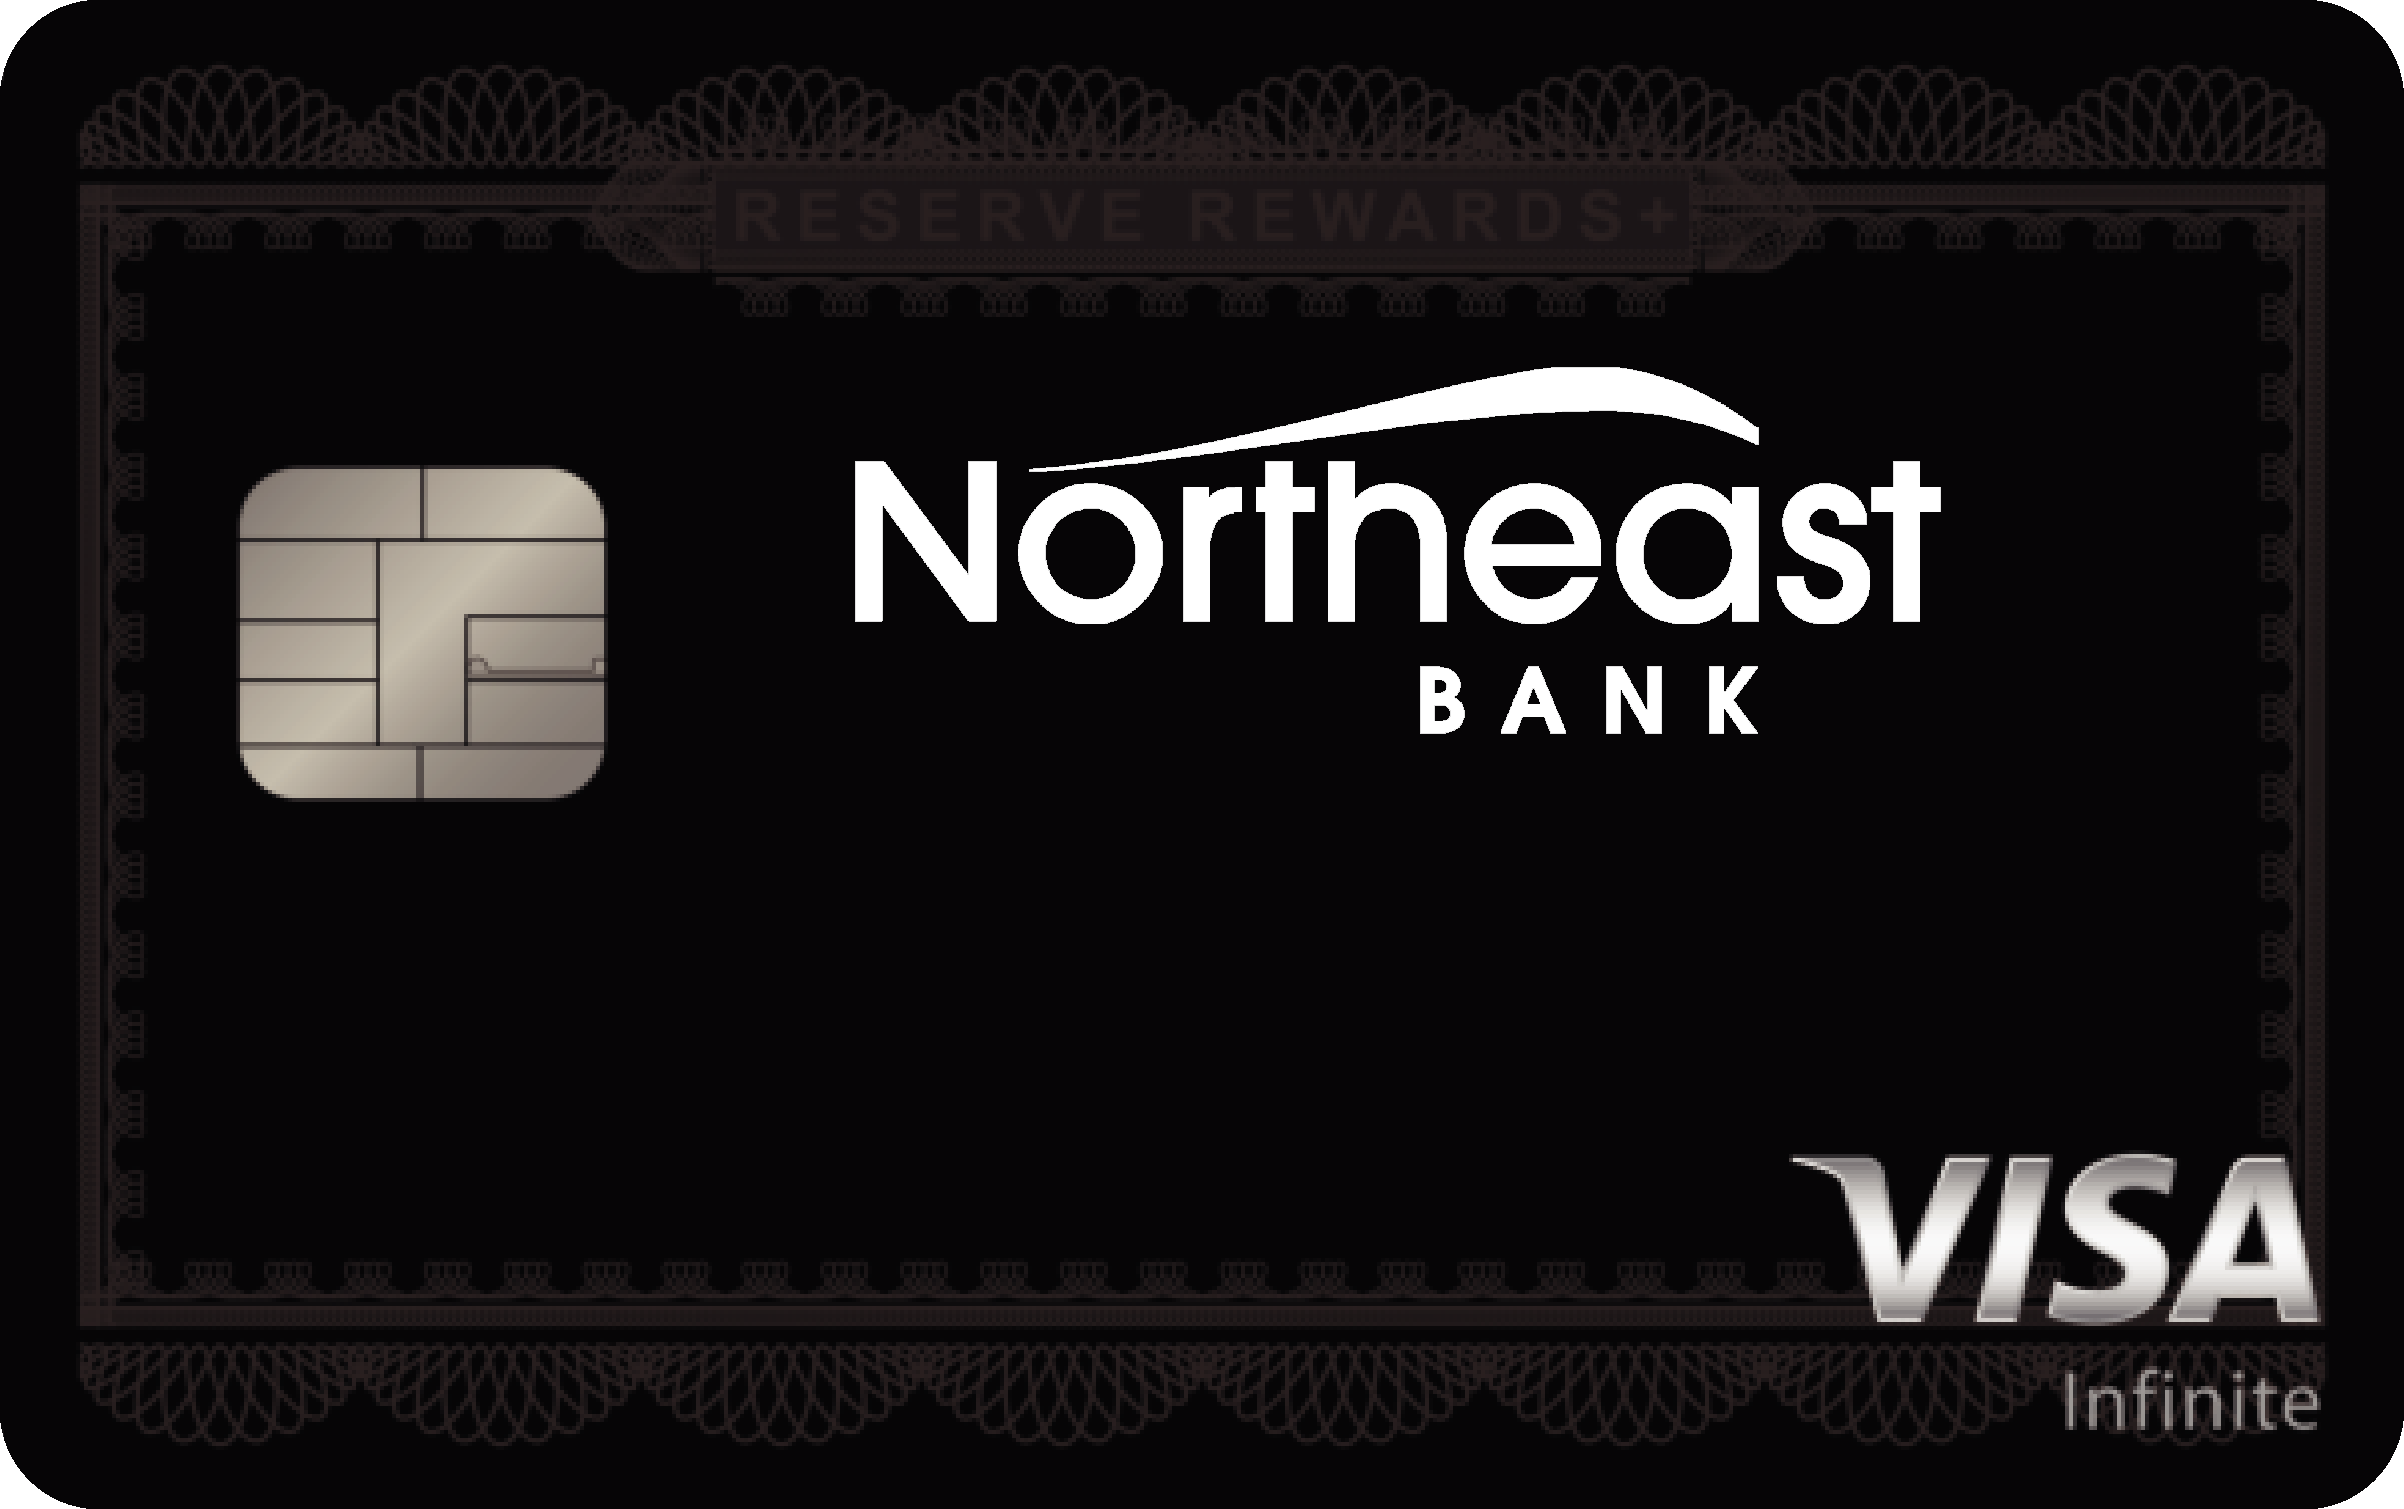 Northeast Bank